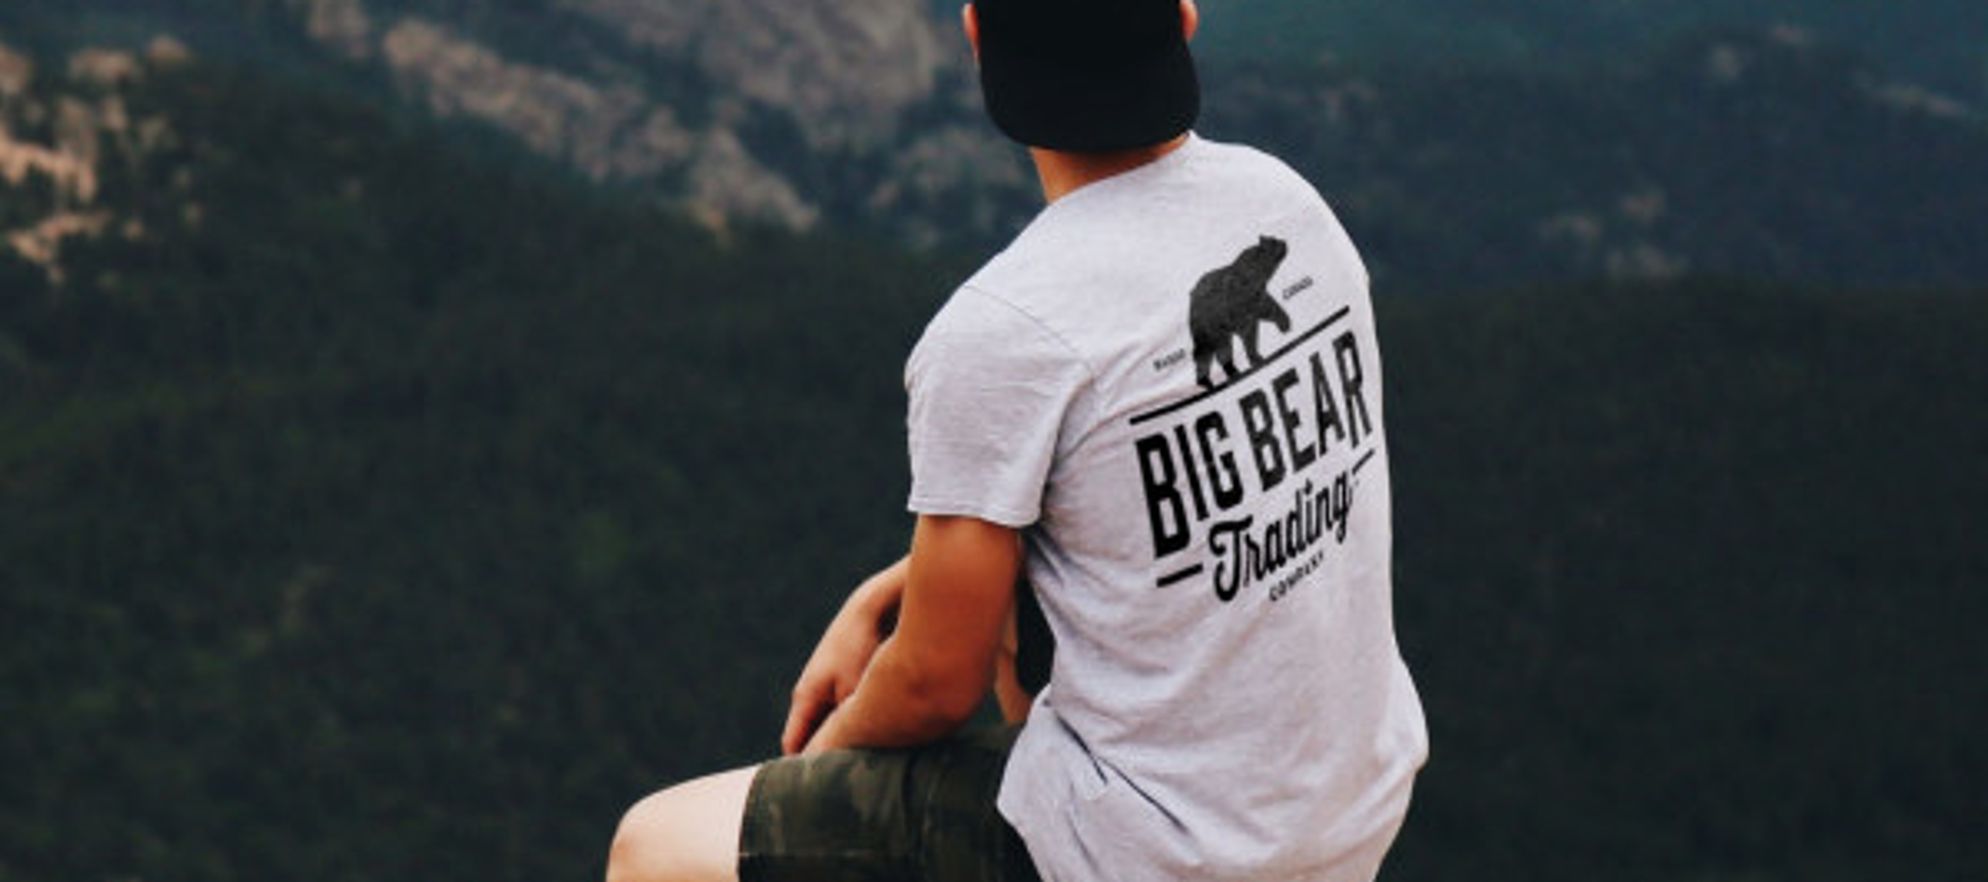 Big Bear Trading Co.